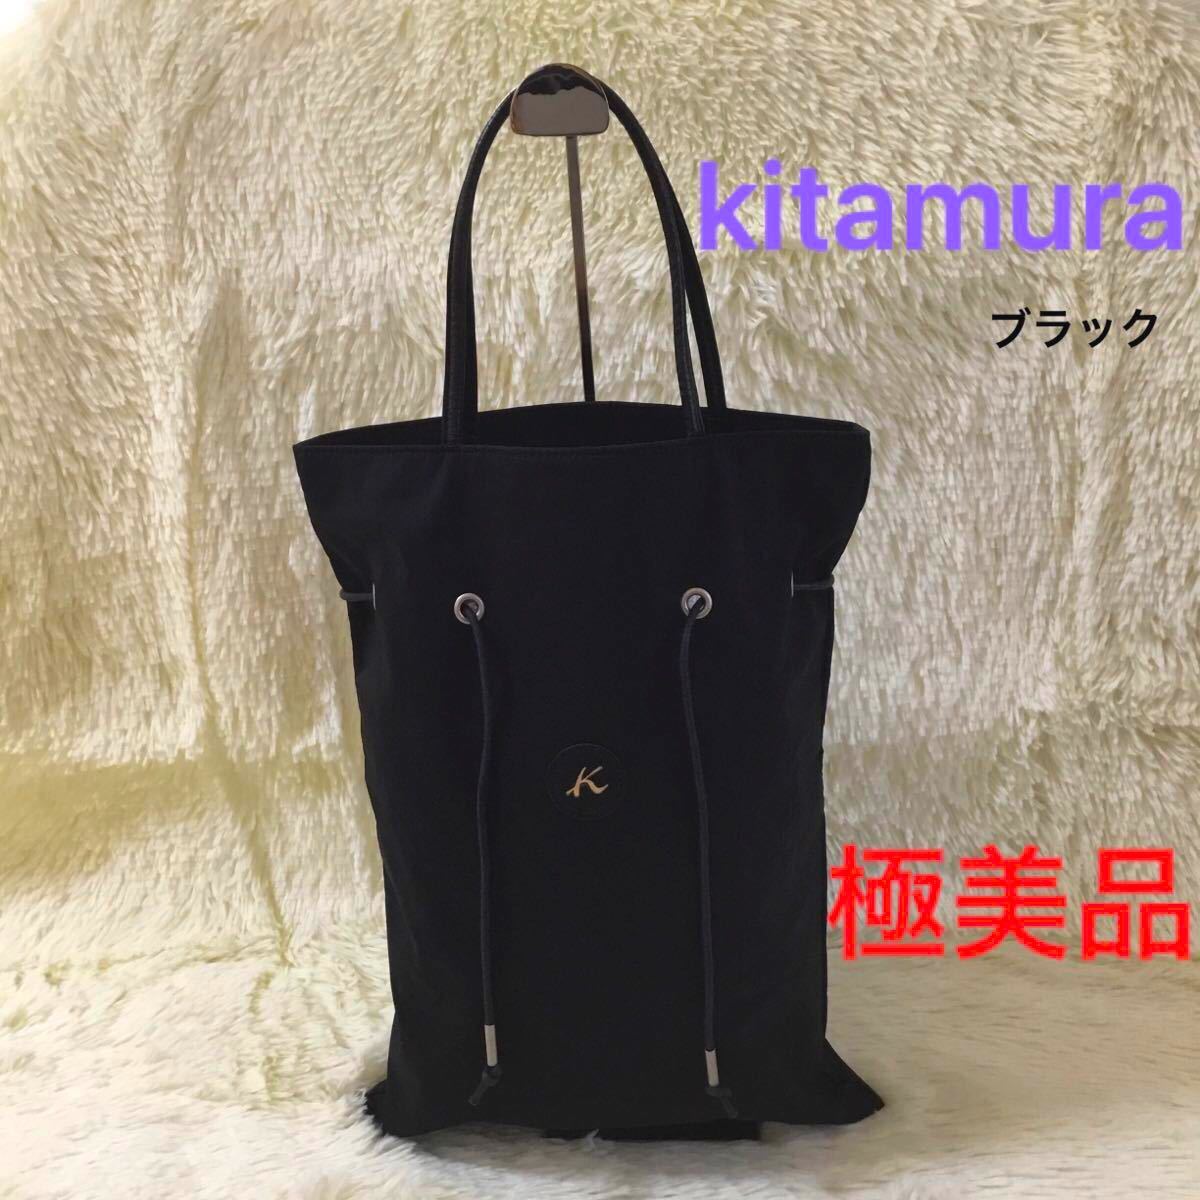 Kitamura キタムラ トートバッグ レディース ブラック